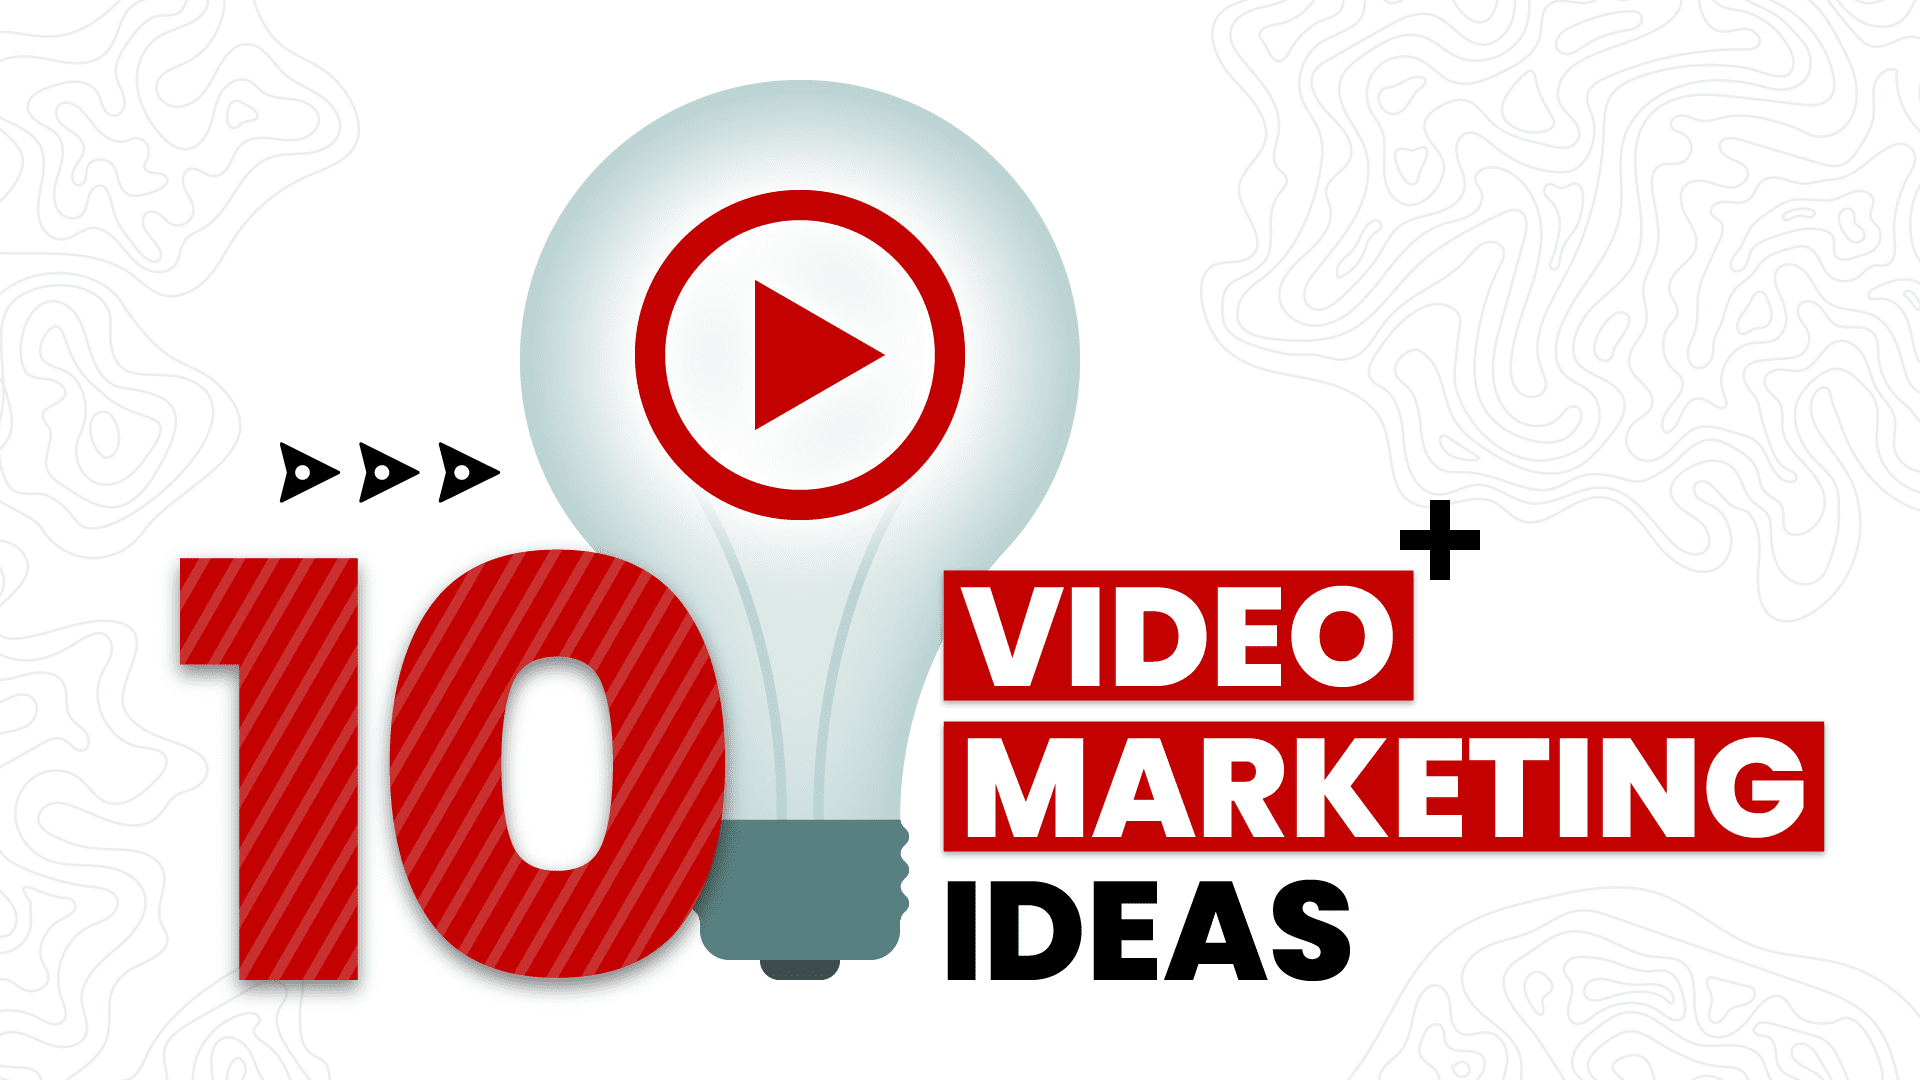 Lightbulb illustration with 10 video marketing ideas